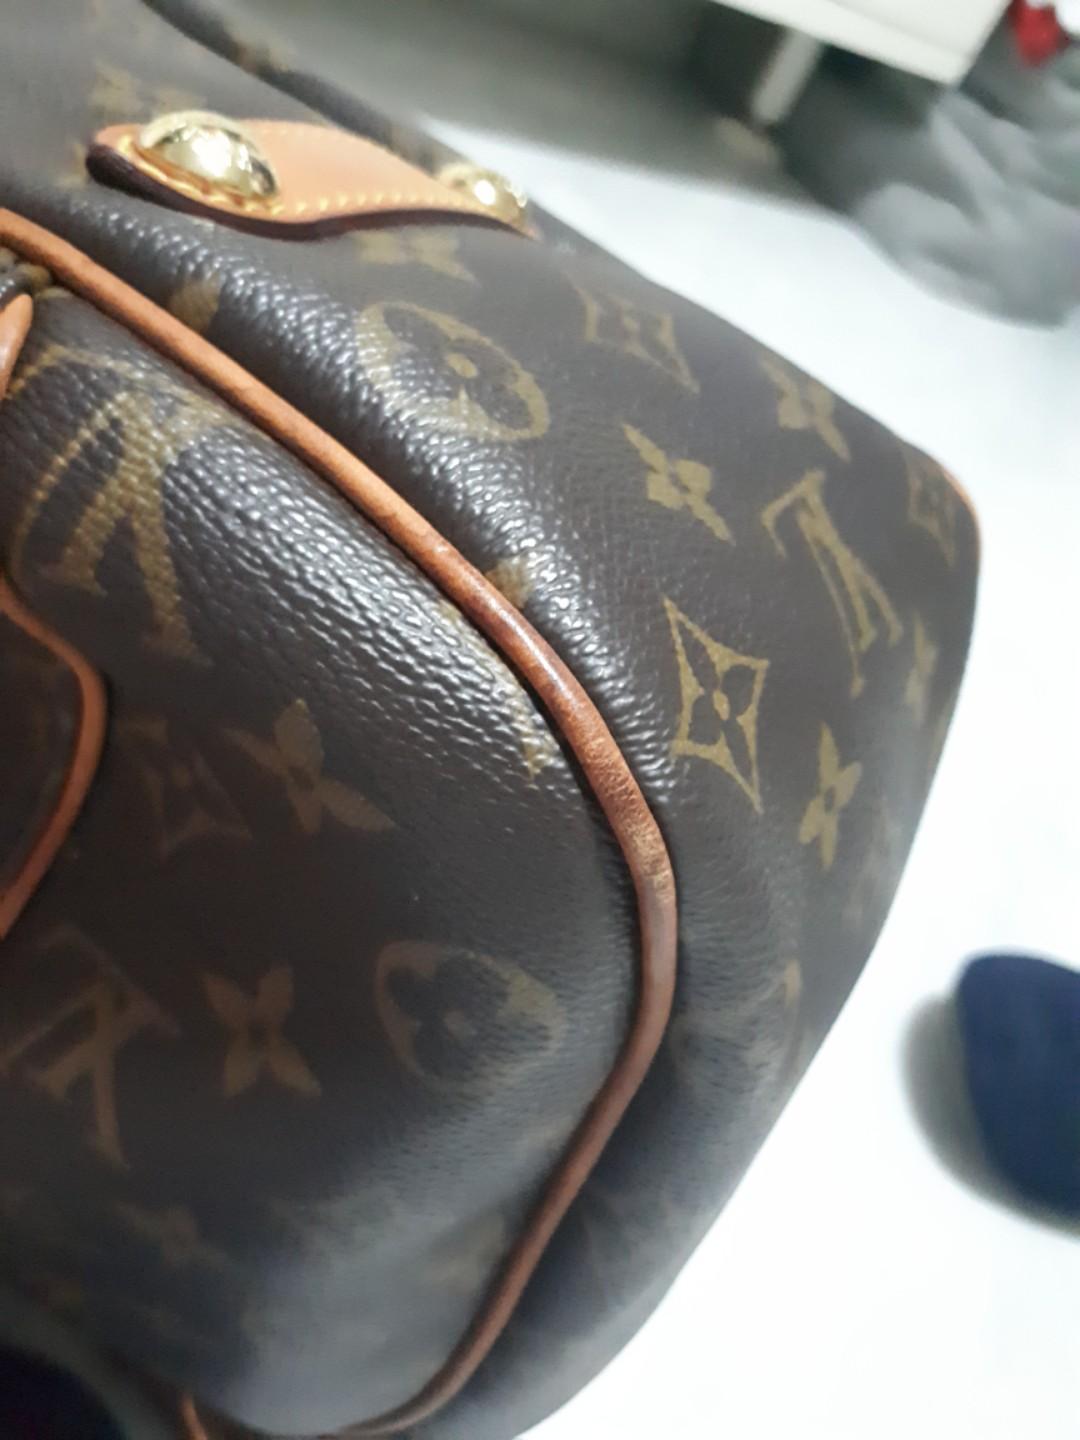 Louis - M56382 – dct - Monogram - Vuitton - ep_vintage luxury Store - Bag -  PM - Shoulder - Galliera - Louis Vuitton Randonnée backpack in monogram  canvas and natural leather